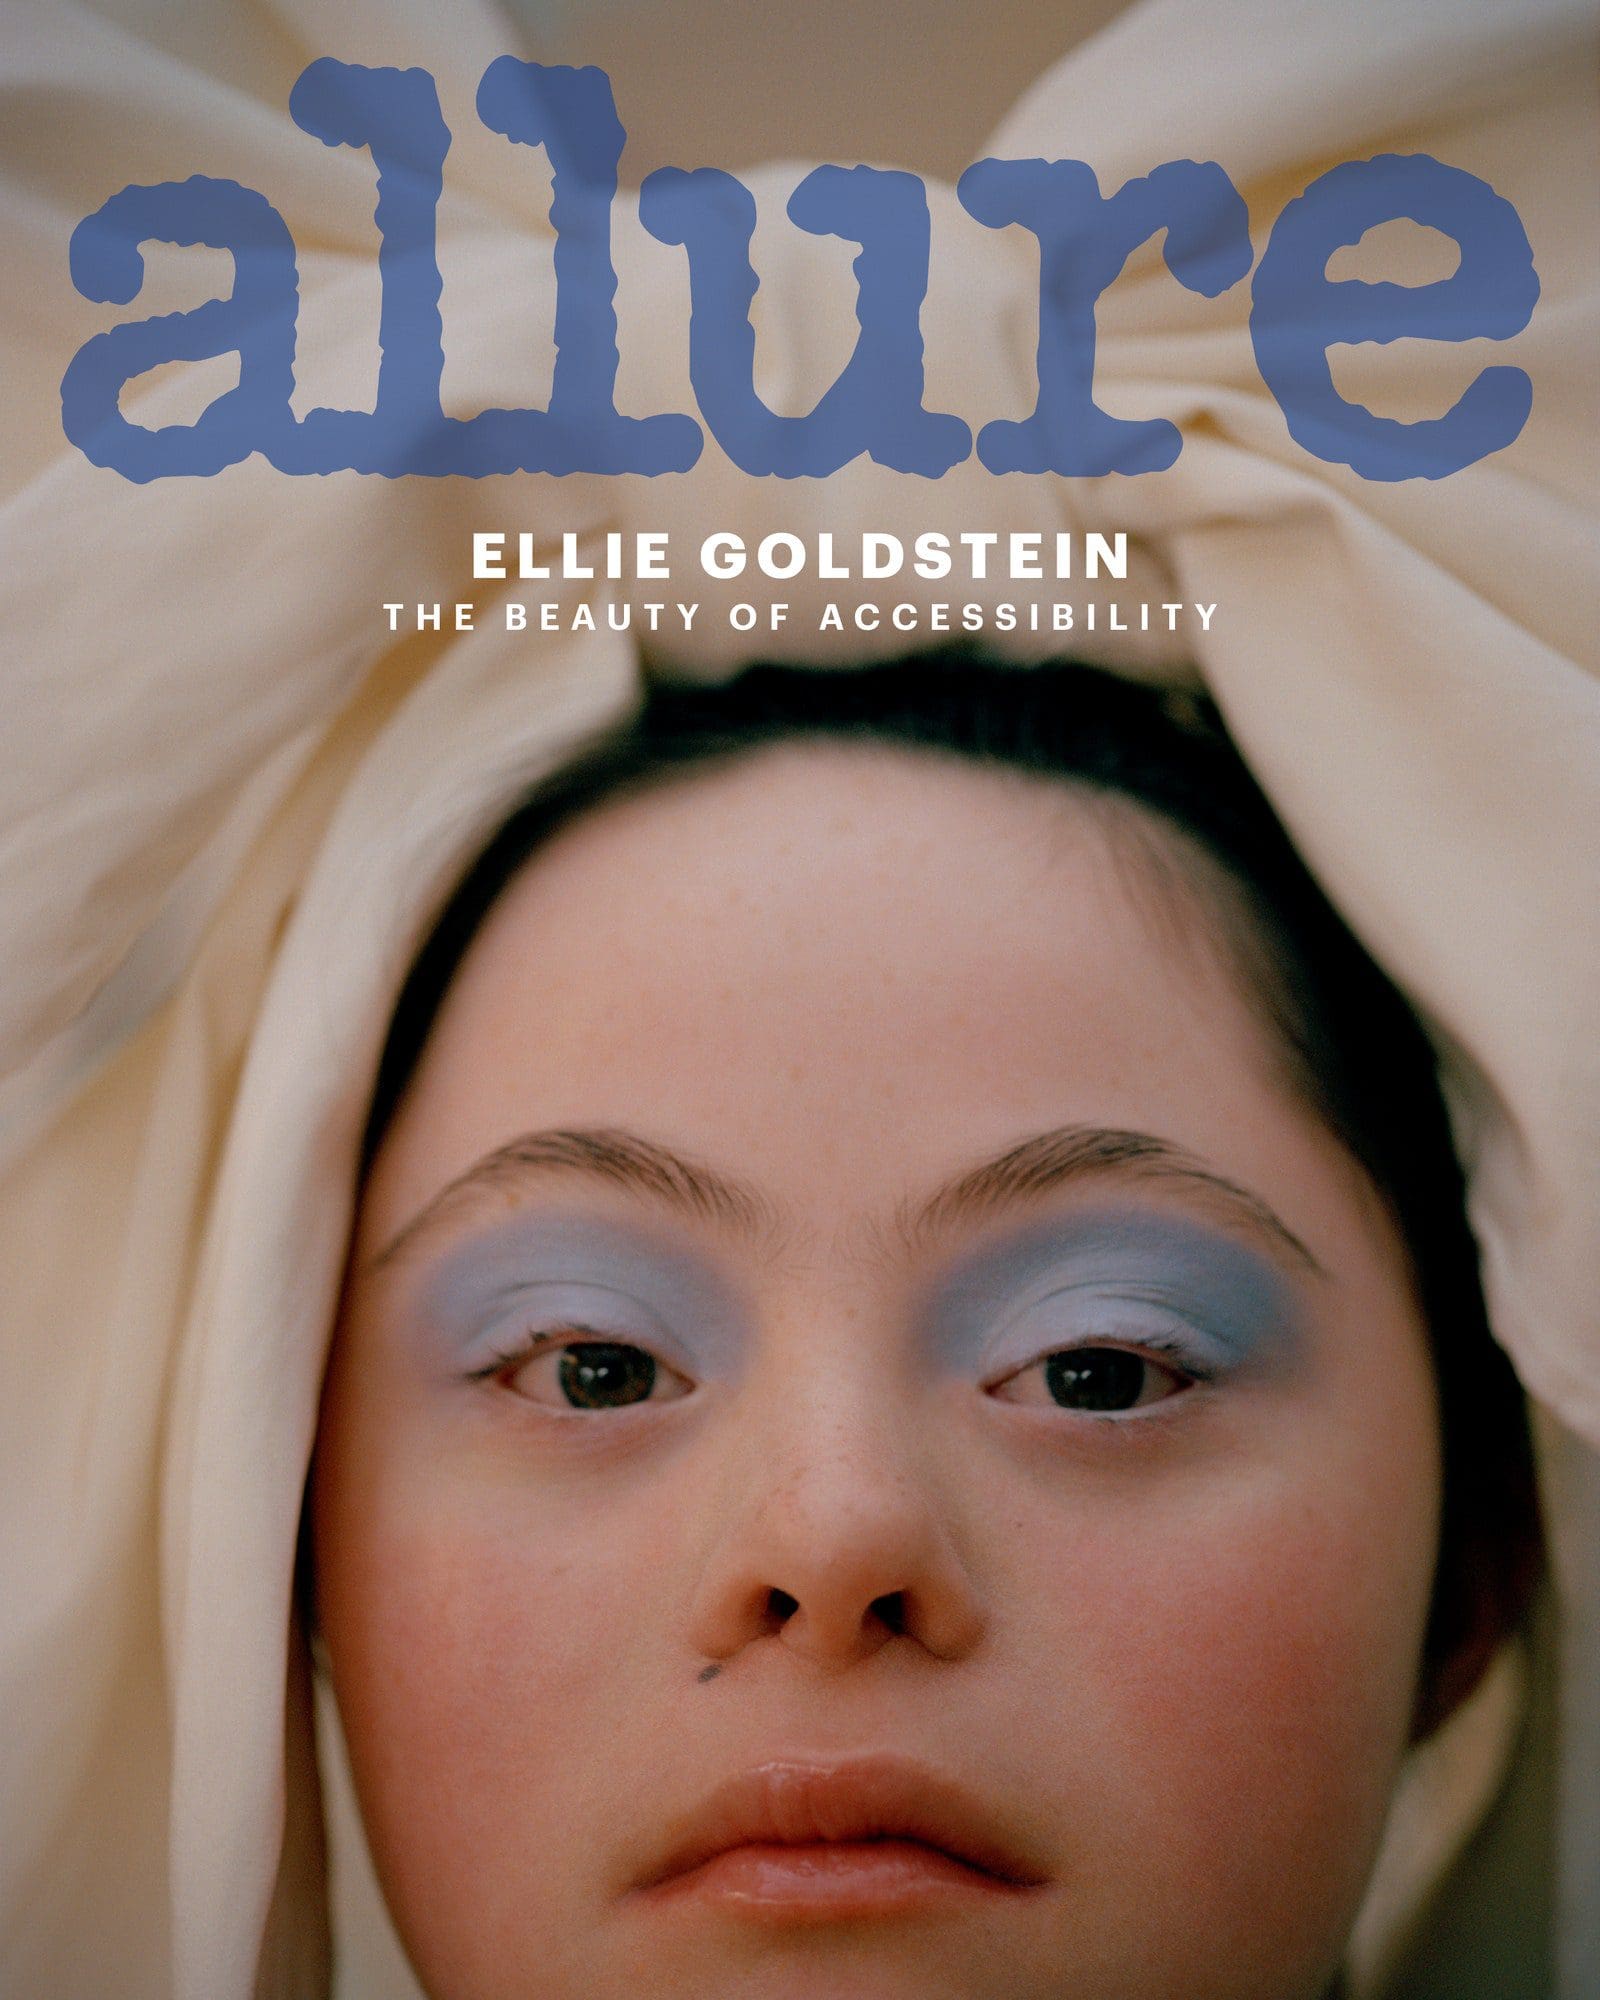 Capa: A beleza de Ellie Goldstein